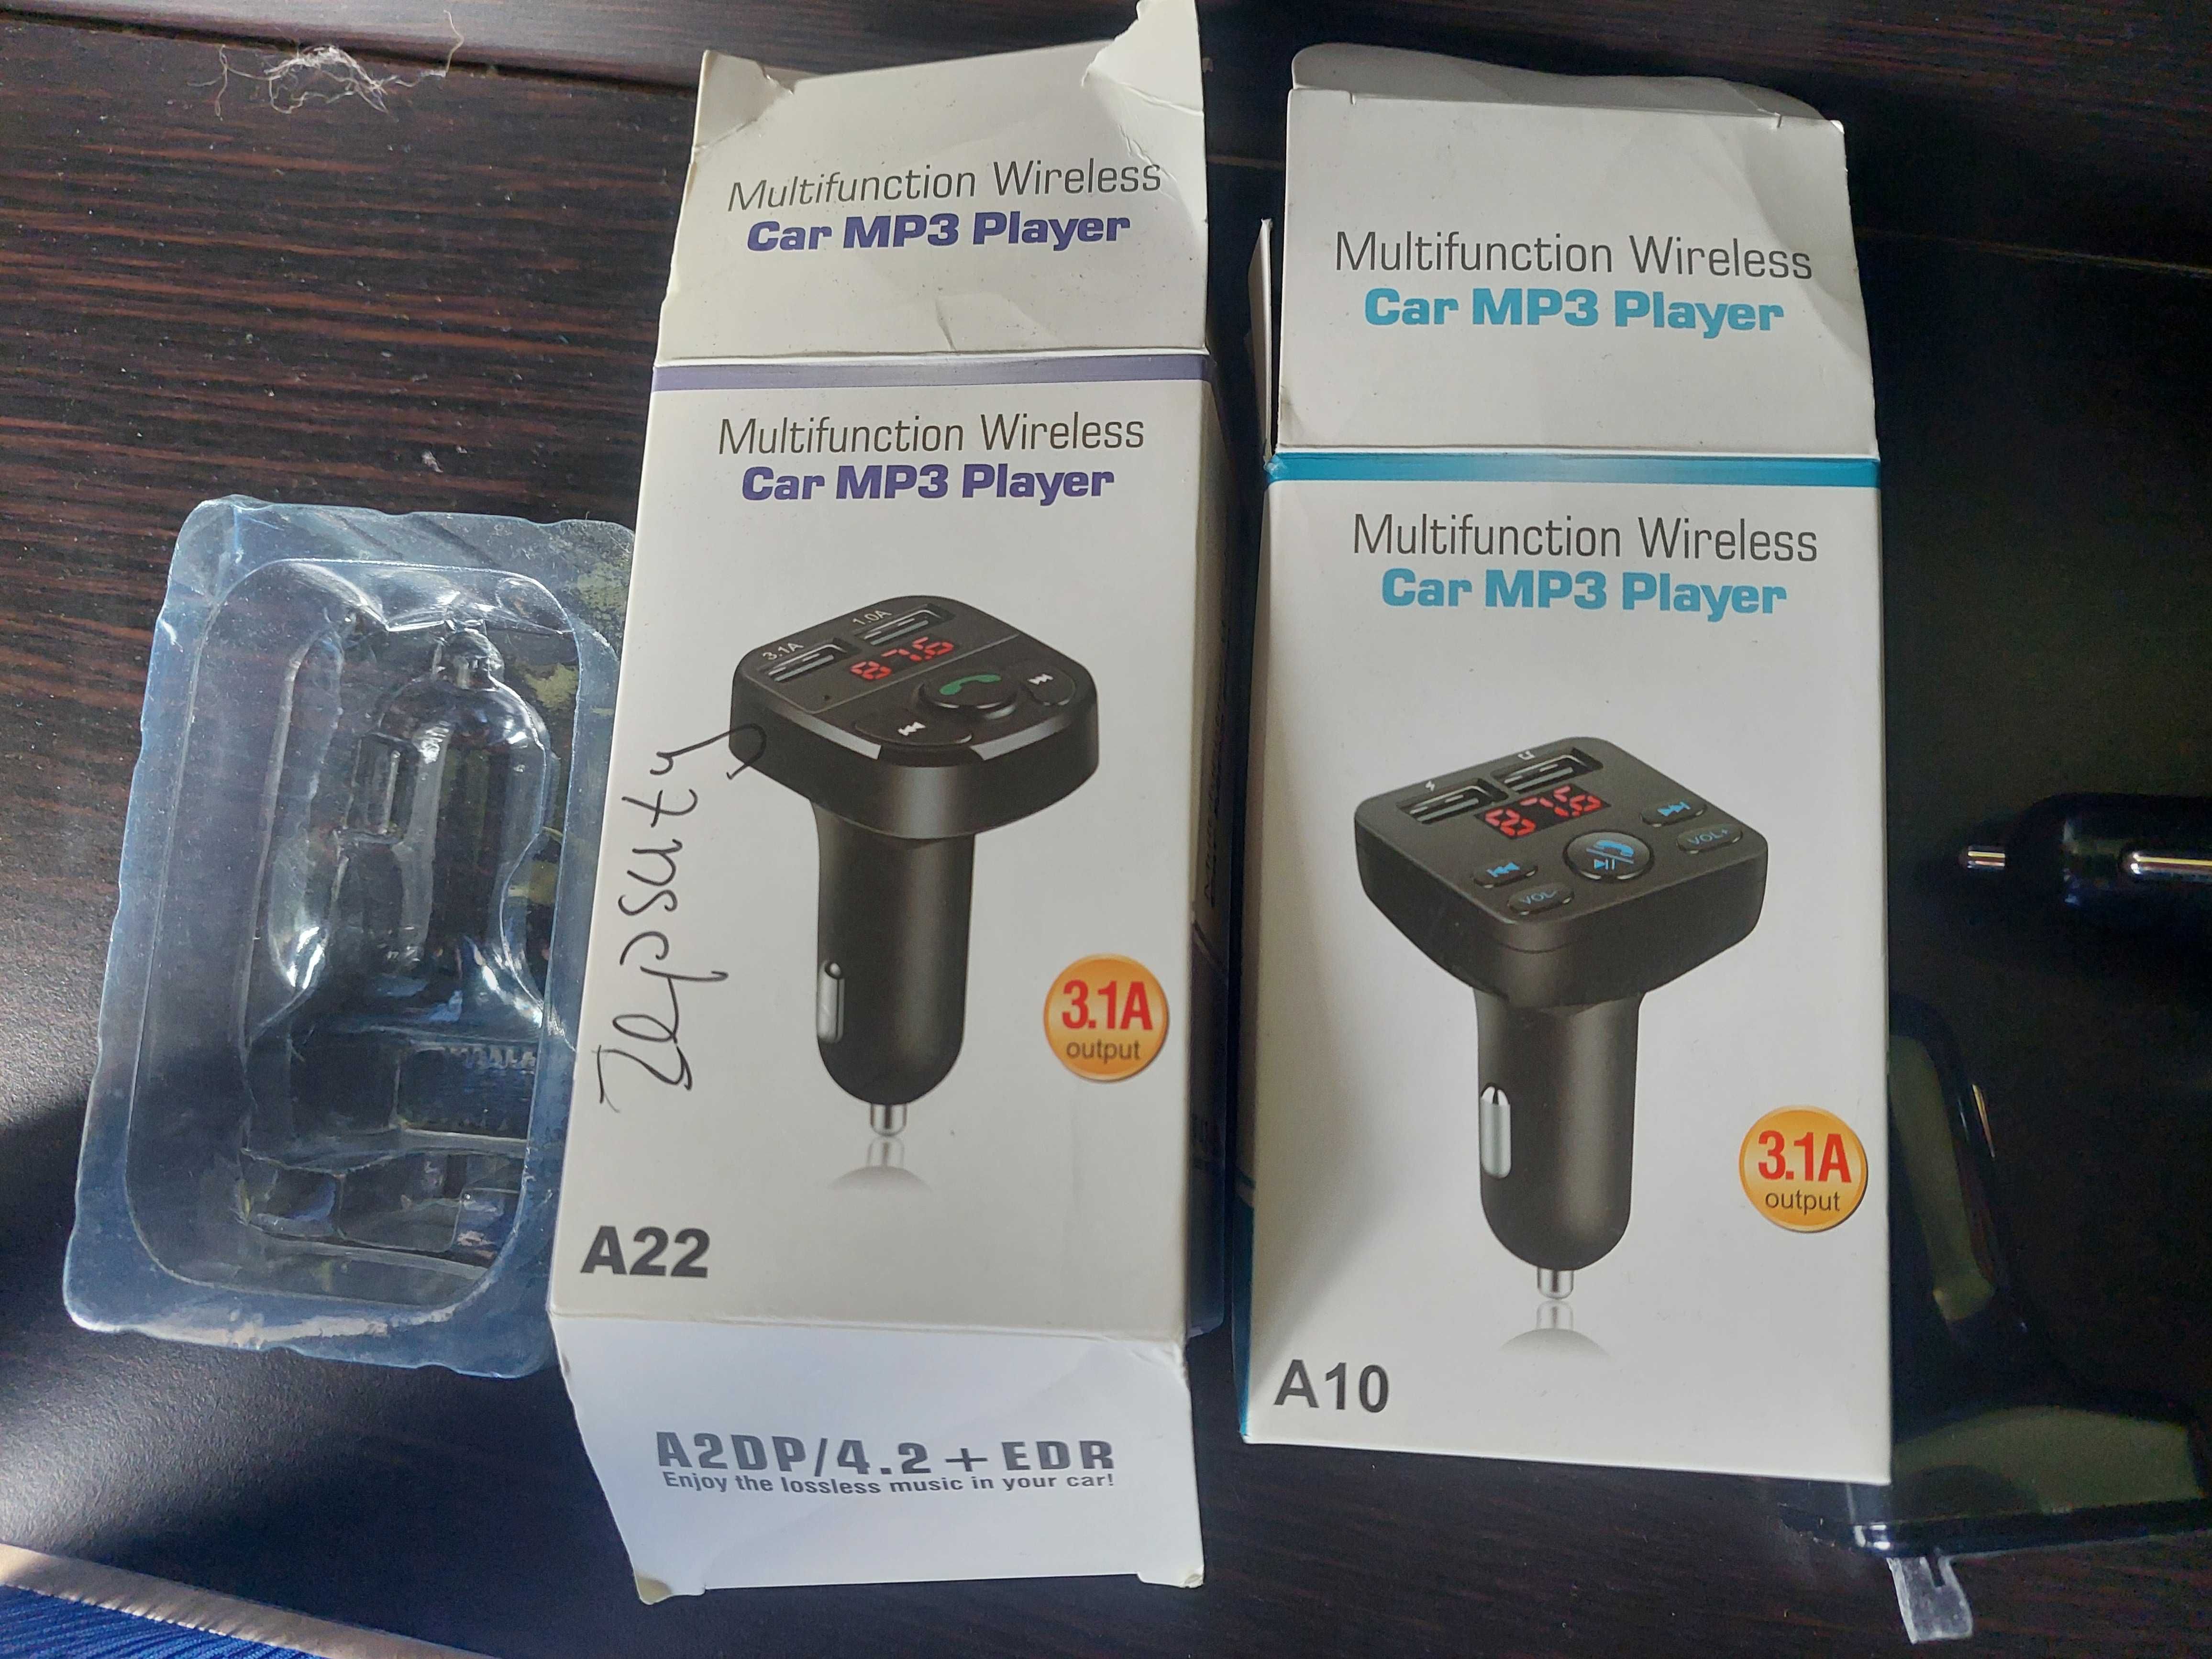 Transmiter FM USB SD/MMC MP3 LCD+pilot, model T892